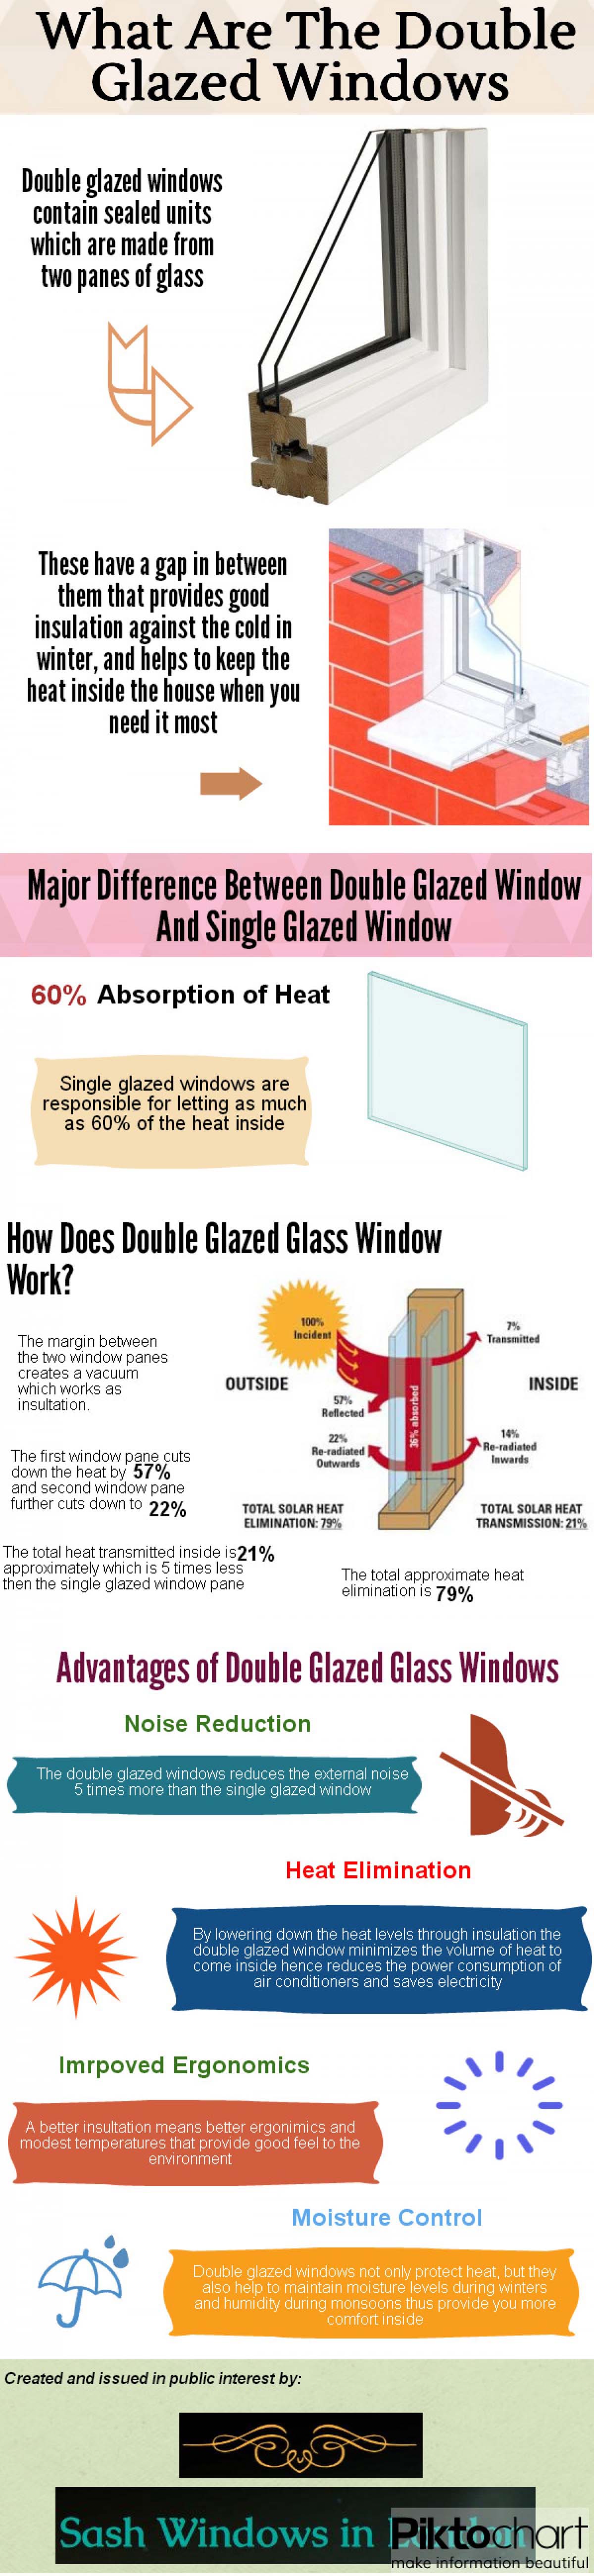 How Double Glazing Works